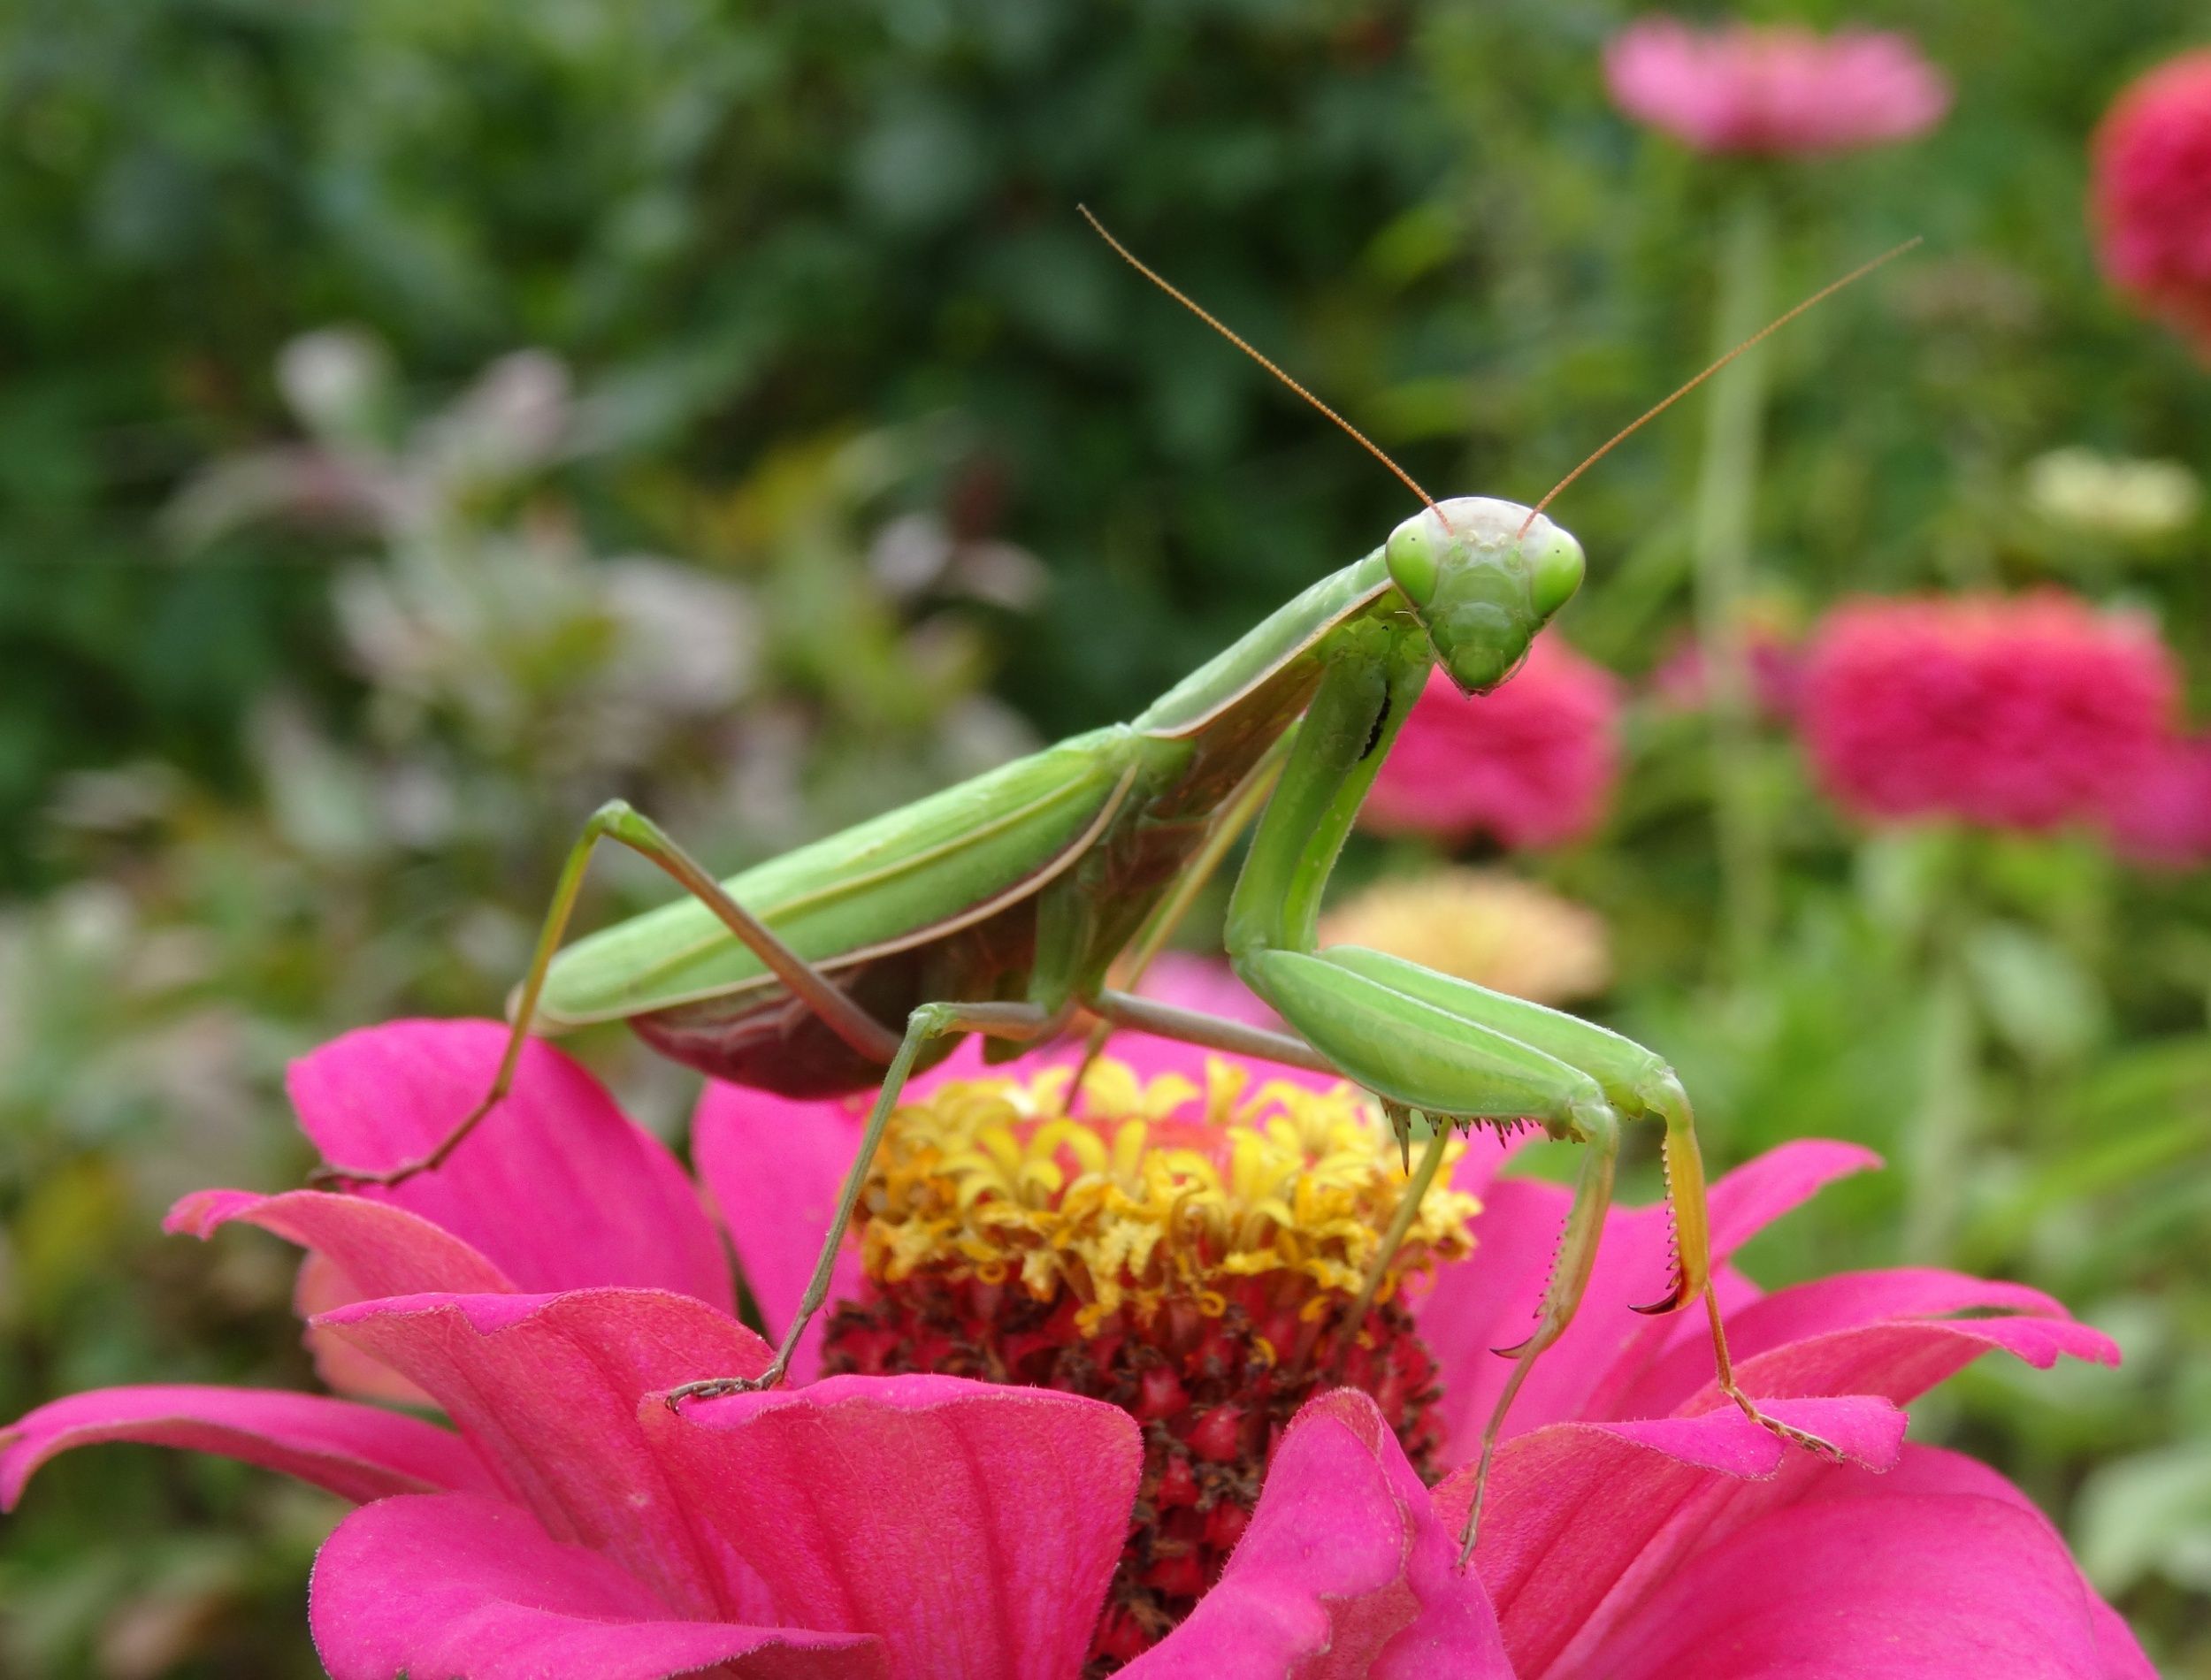 praying mantis on flower in garden